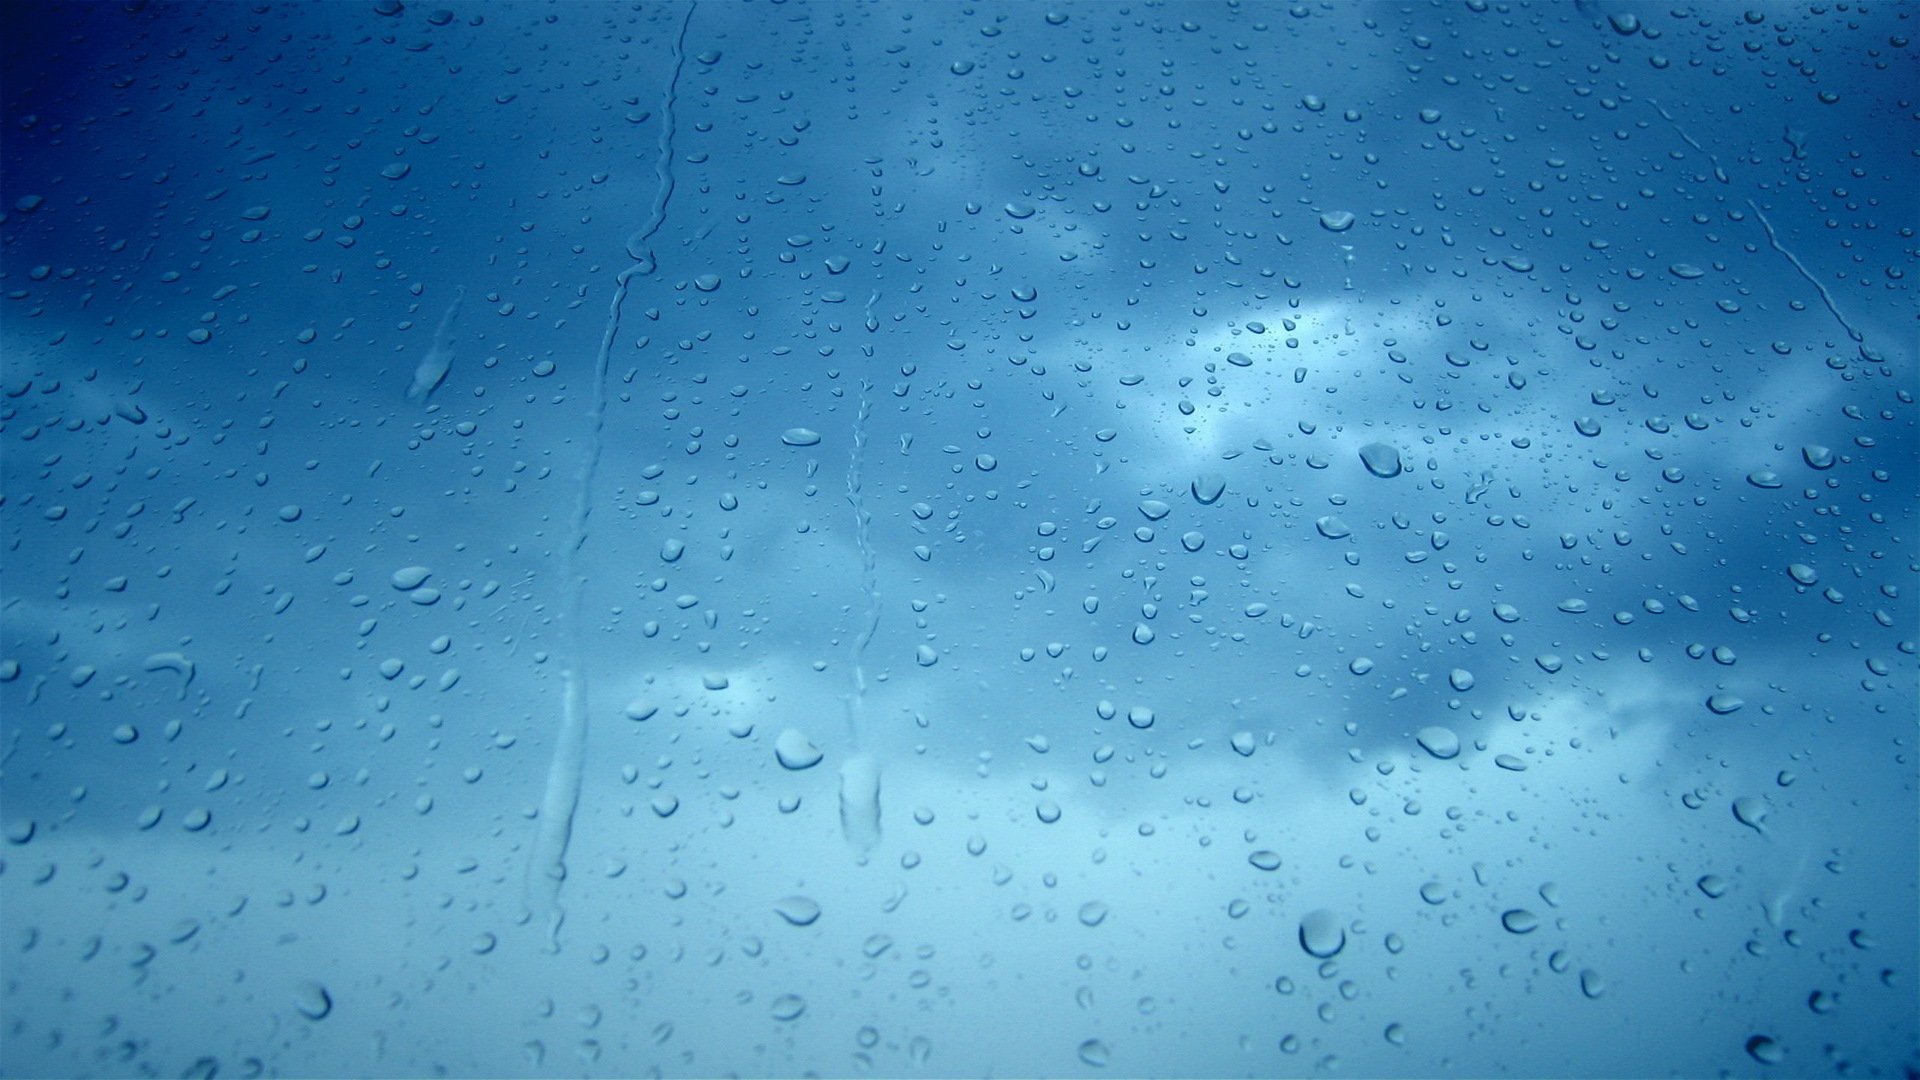 Raindrops on the window wallpaper   868694